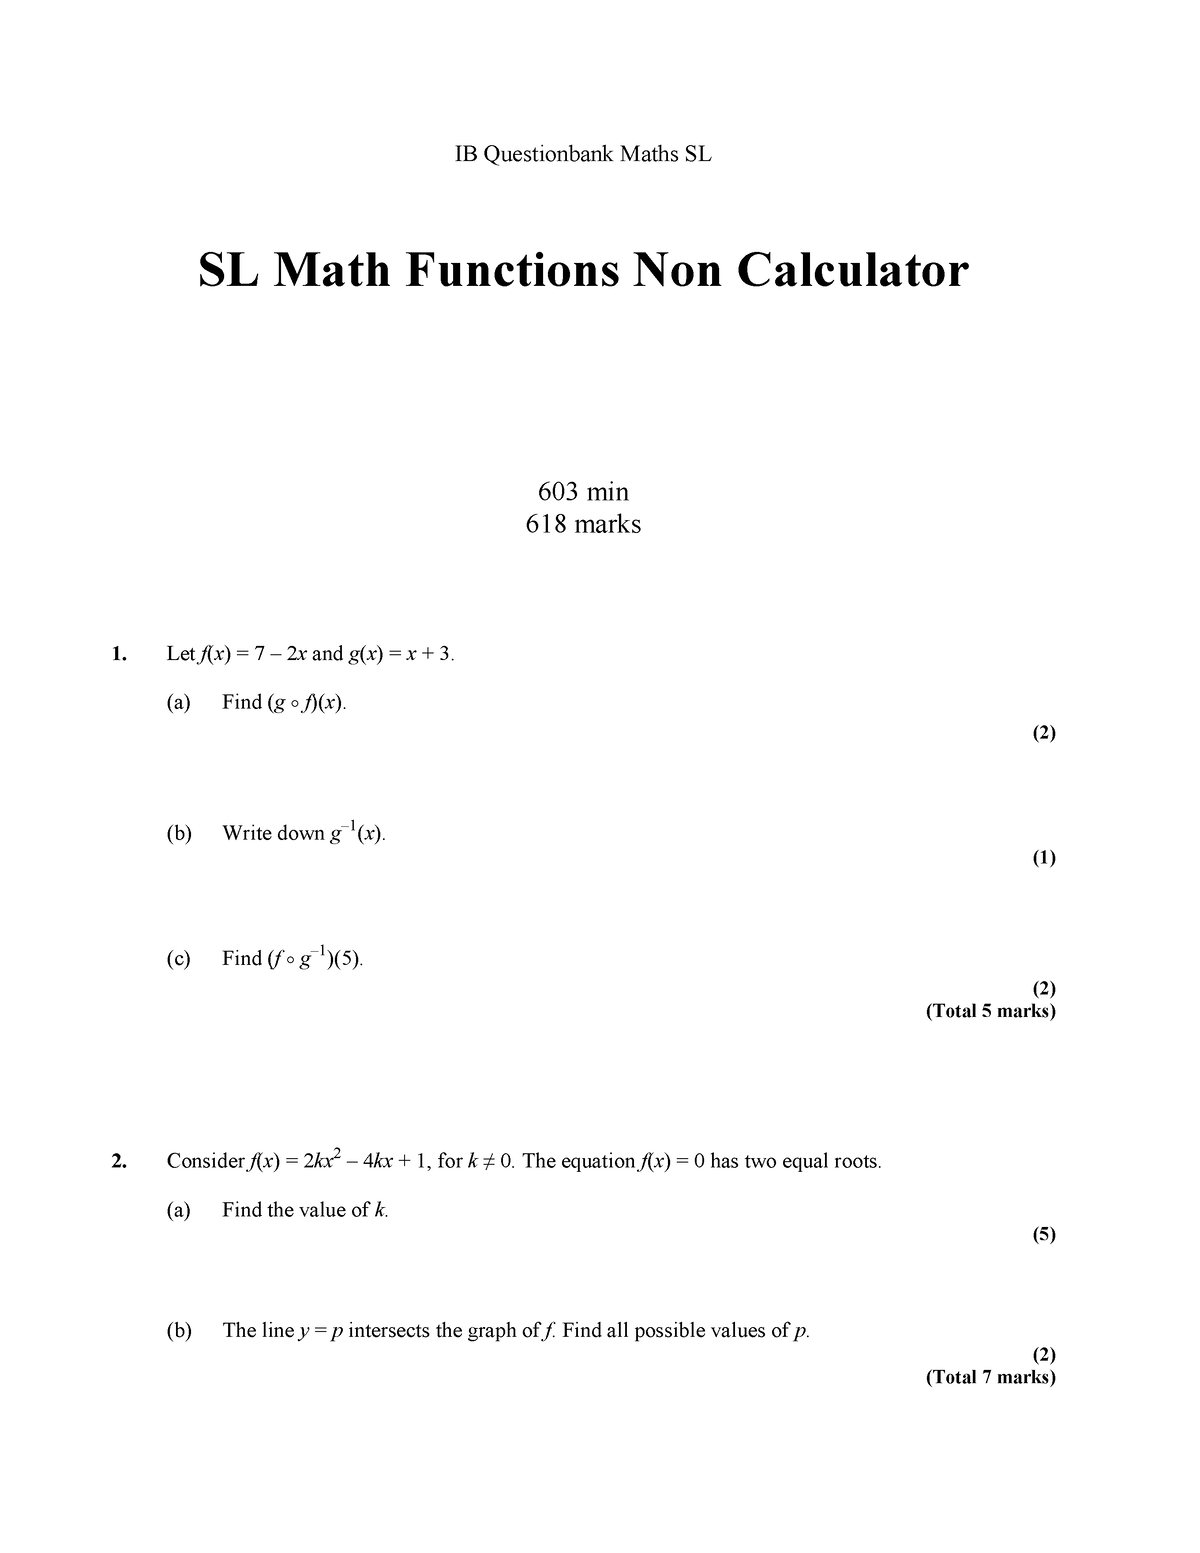 sl-math-functions-all-non-calculator-ib-questionbank-maths-sl-sl-math